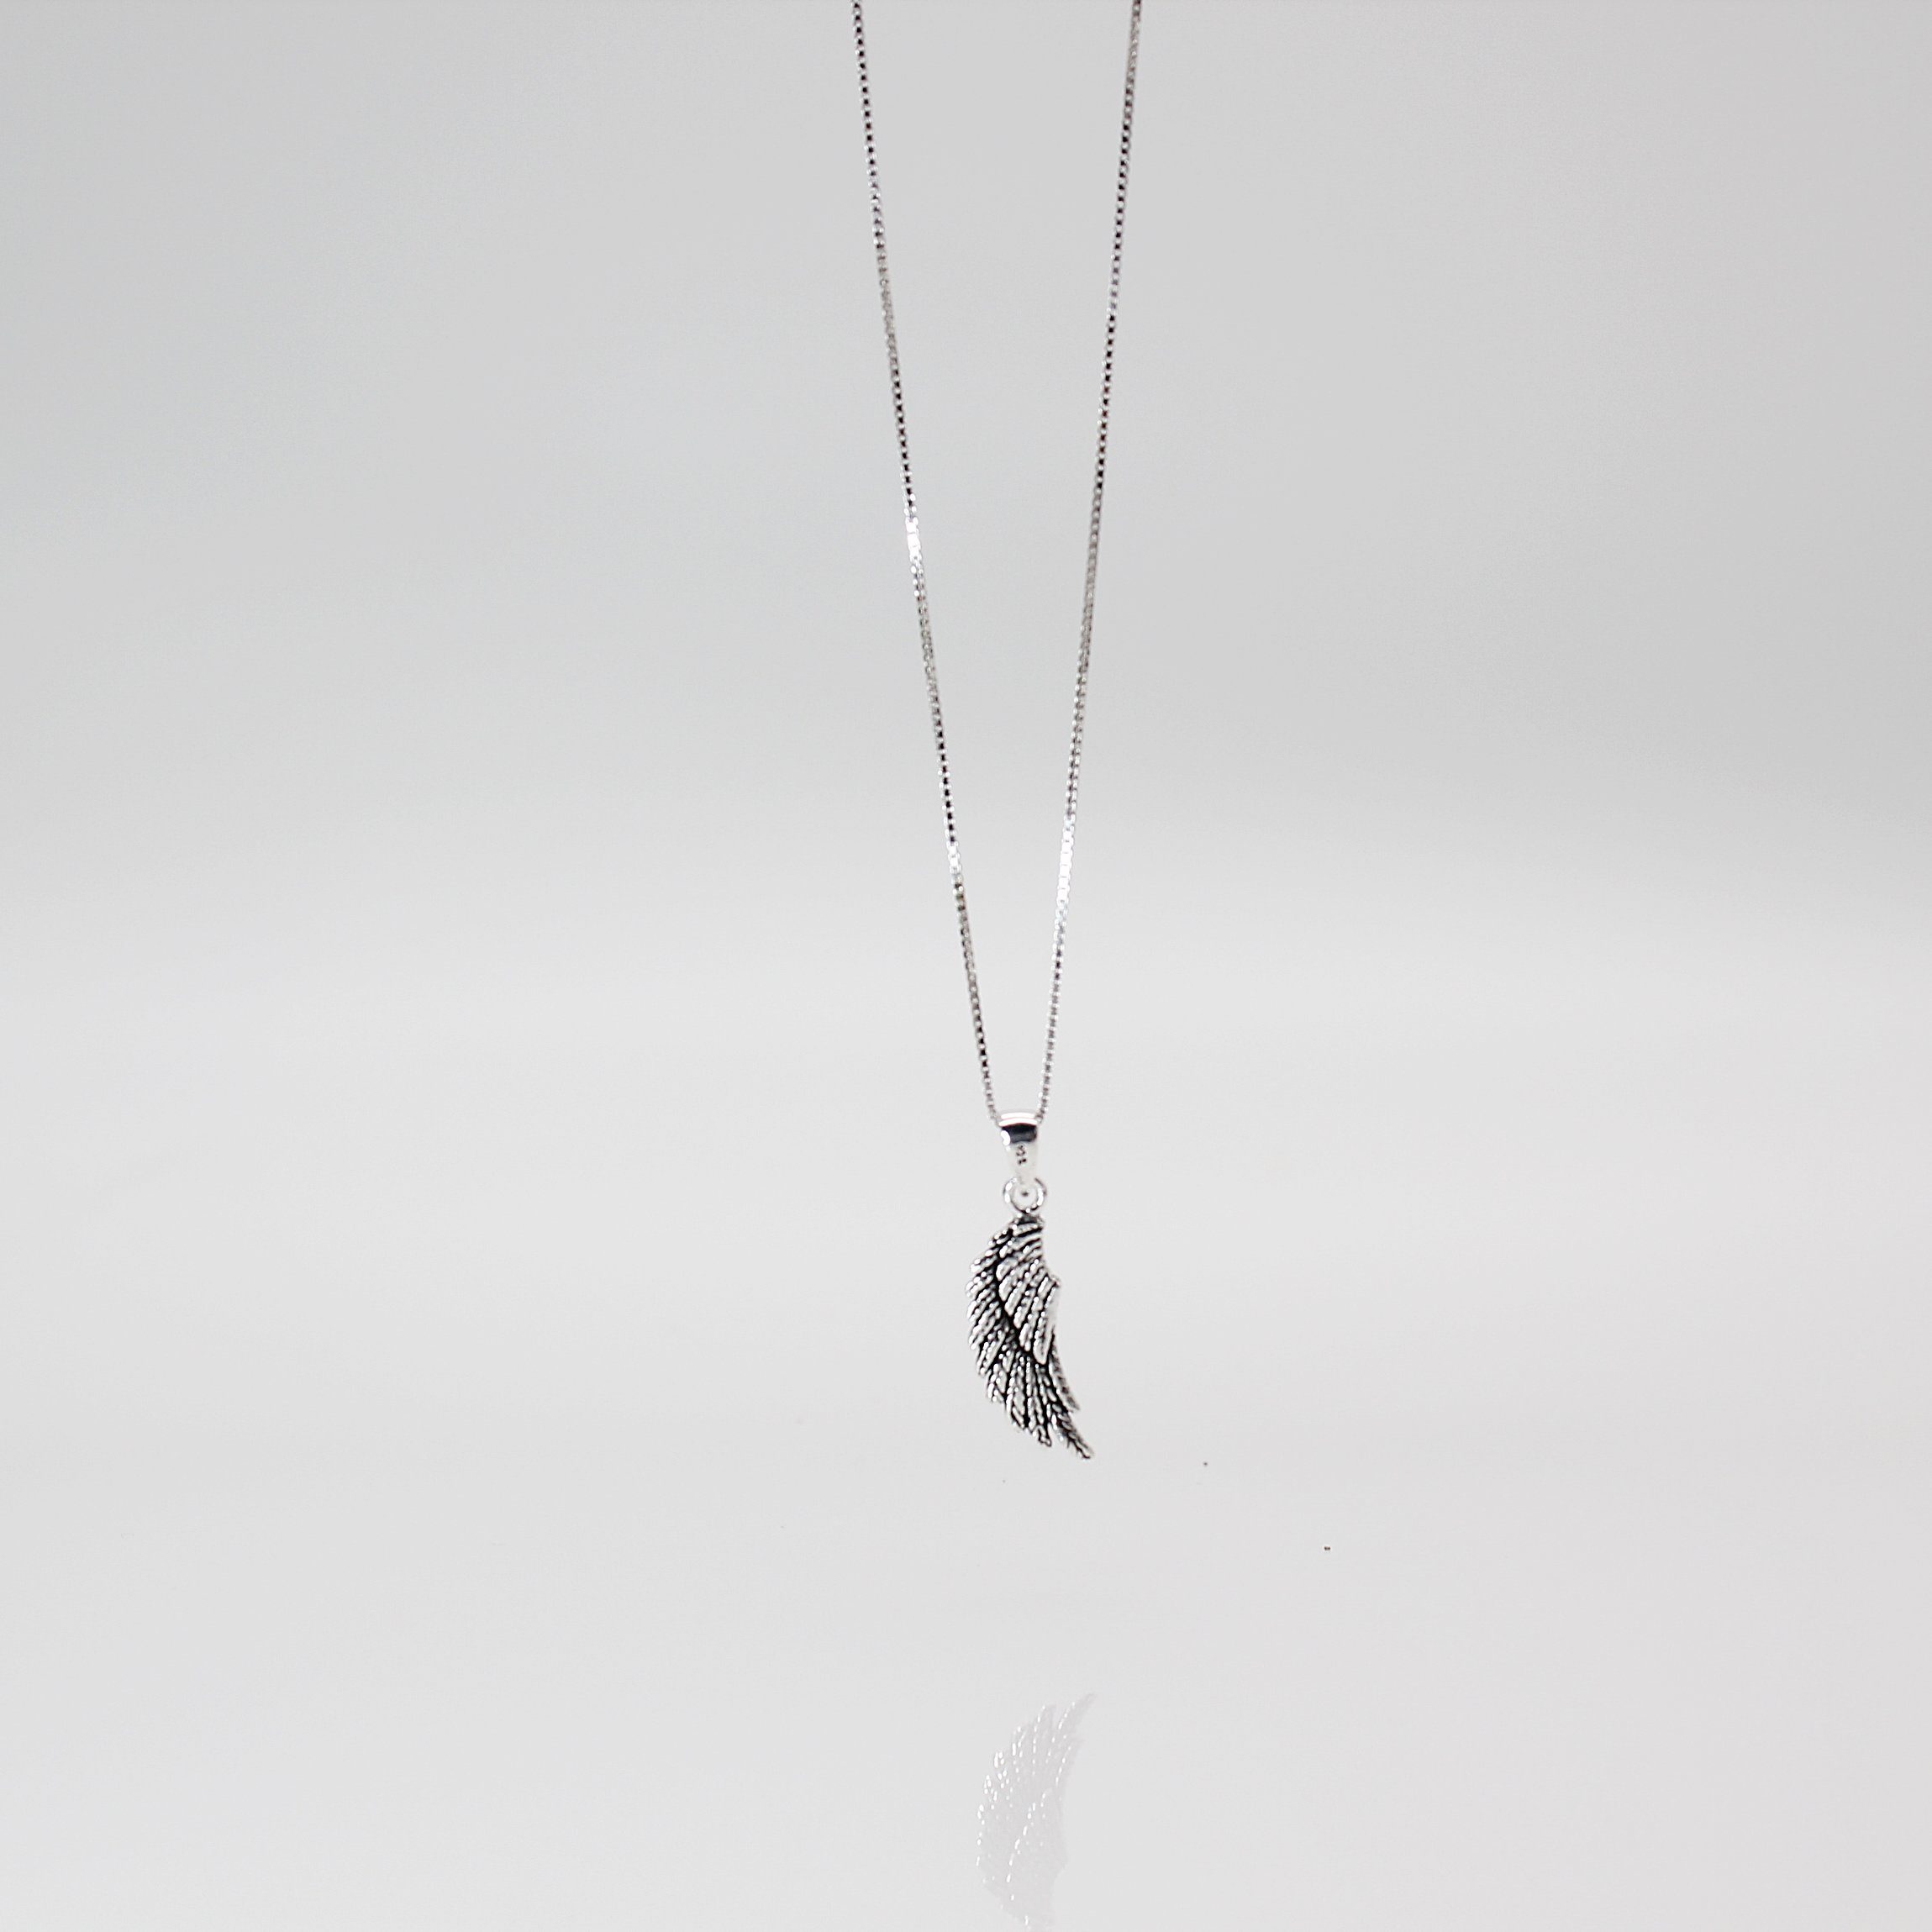 ELLAWIL Silberkette Kette mit Engelsflügel Anhänger Anhänger Engel Flügel Silberkette (Kettenlänge 45 cm, Sterling Silber 925), inklusive Geschenkschachtel